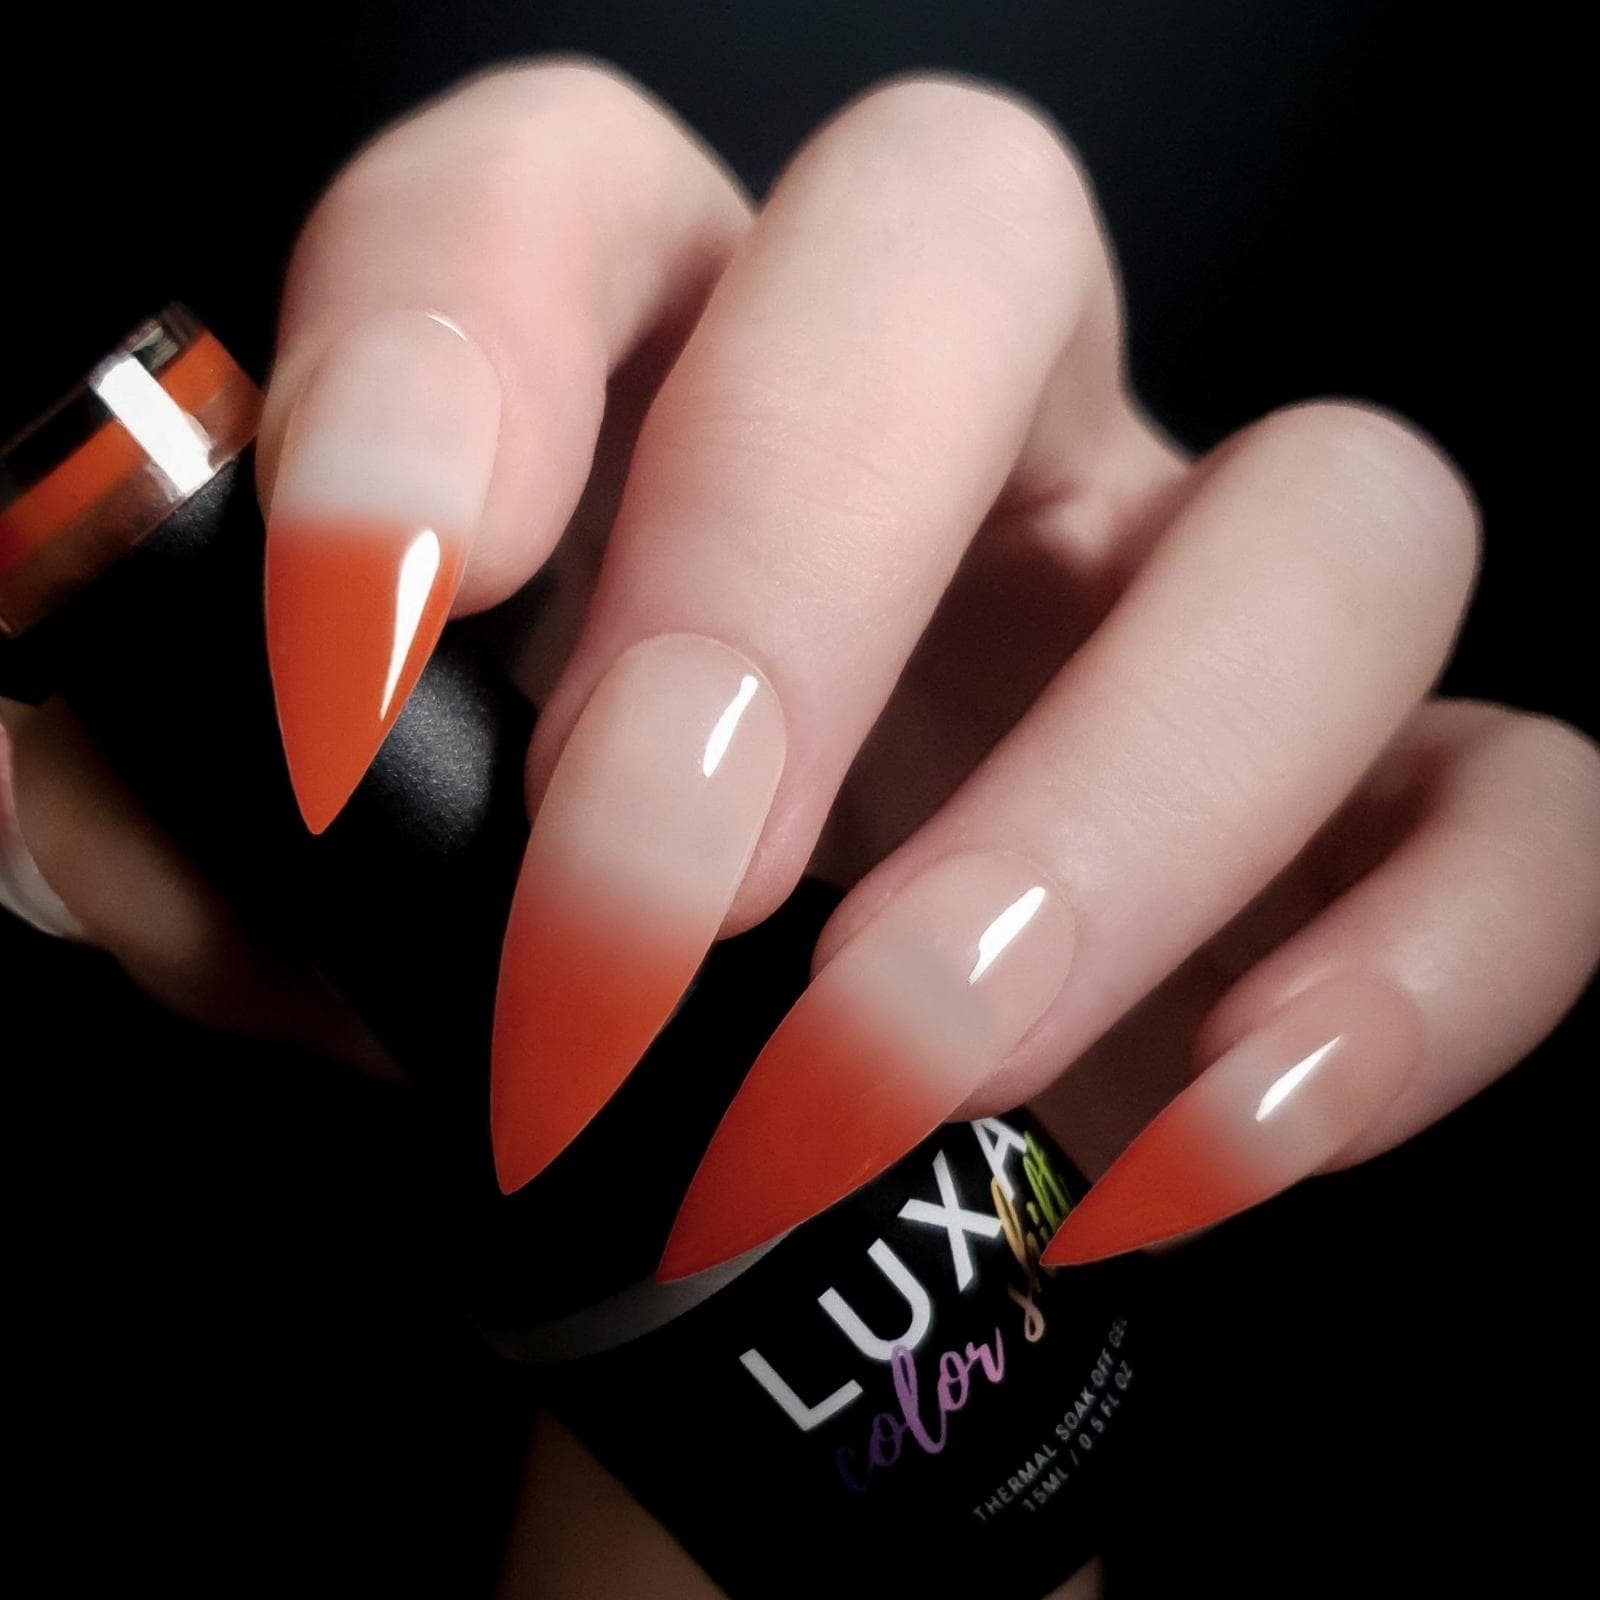 Luxapolish Orange Creme